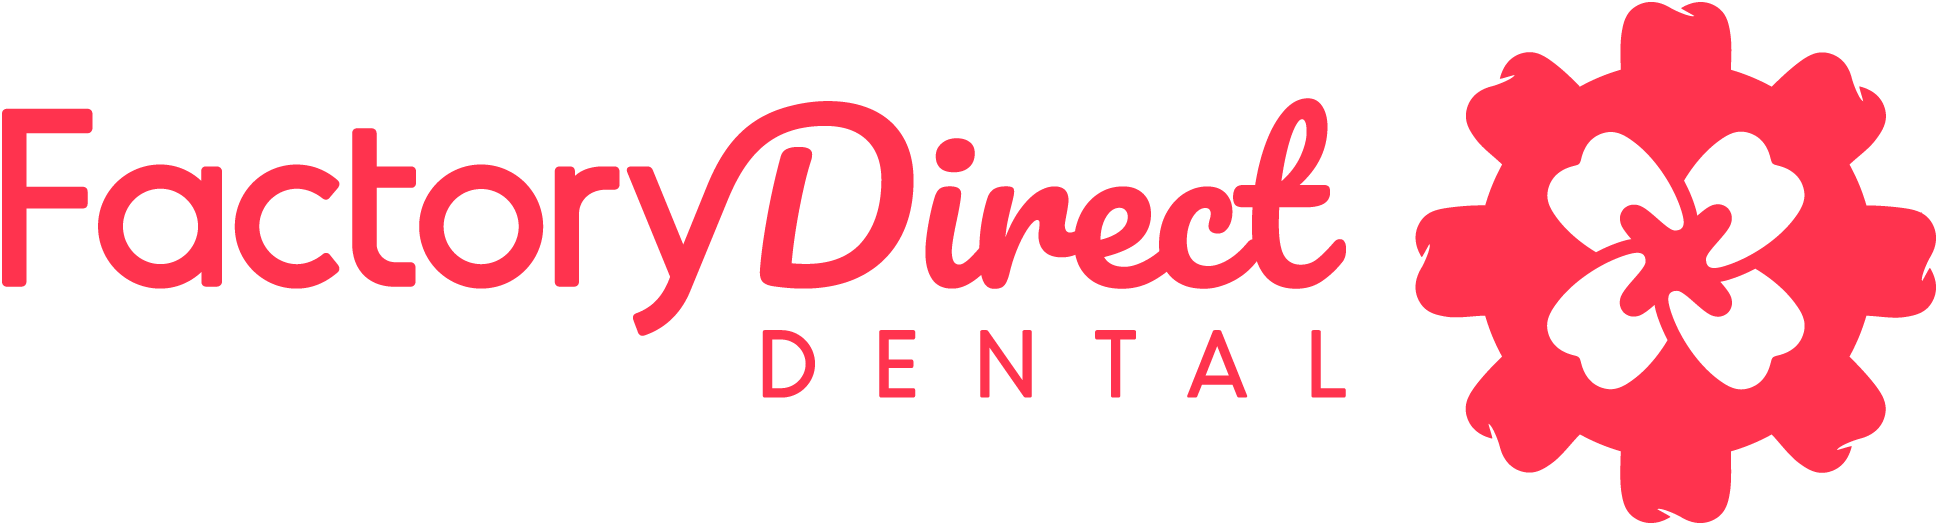 Factory Direct Dental